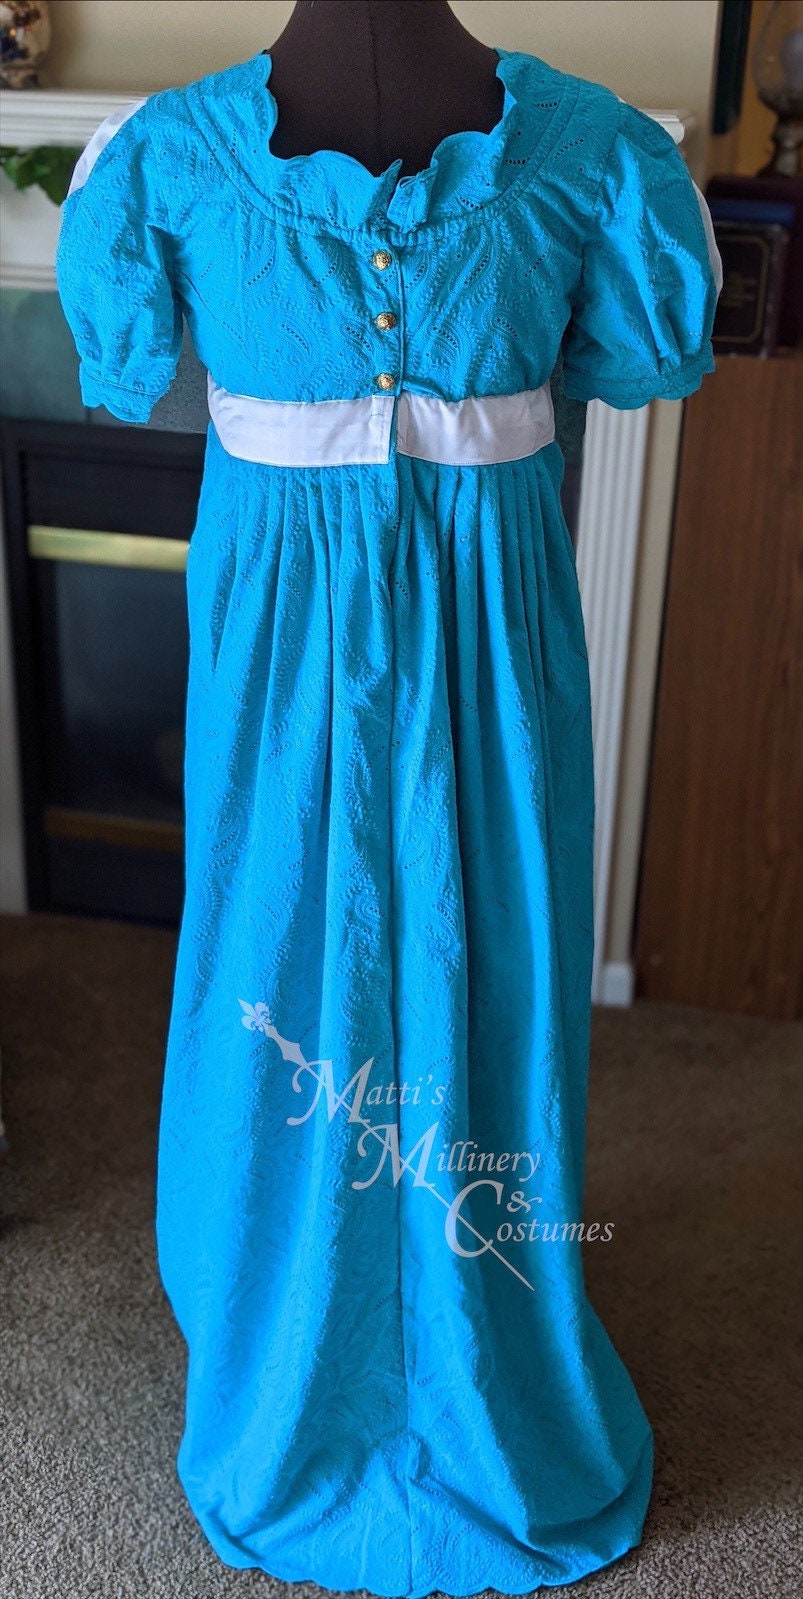 Jane Austen Regency Day Dress Gown Embroidered Eyelet Cotton